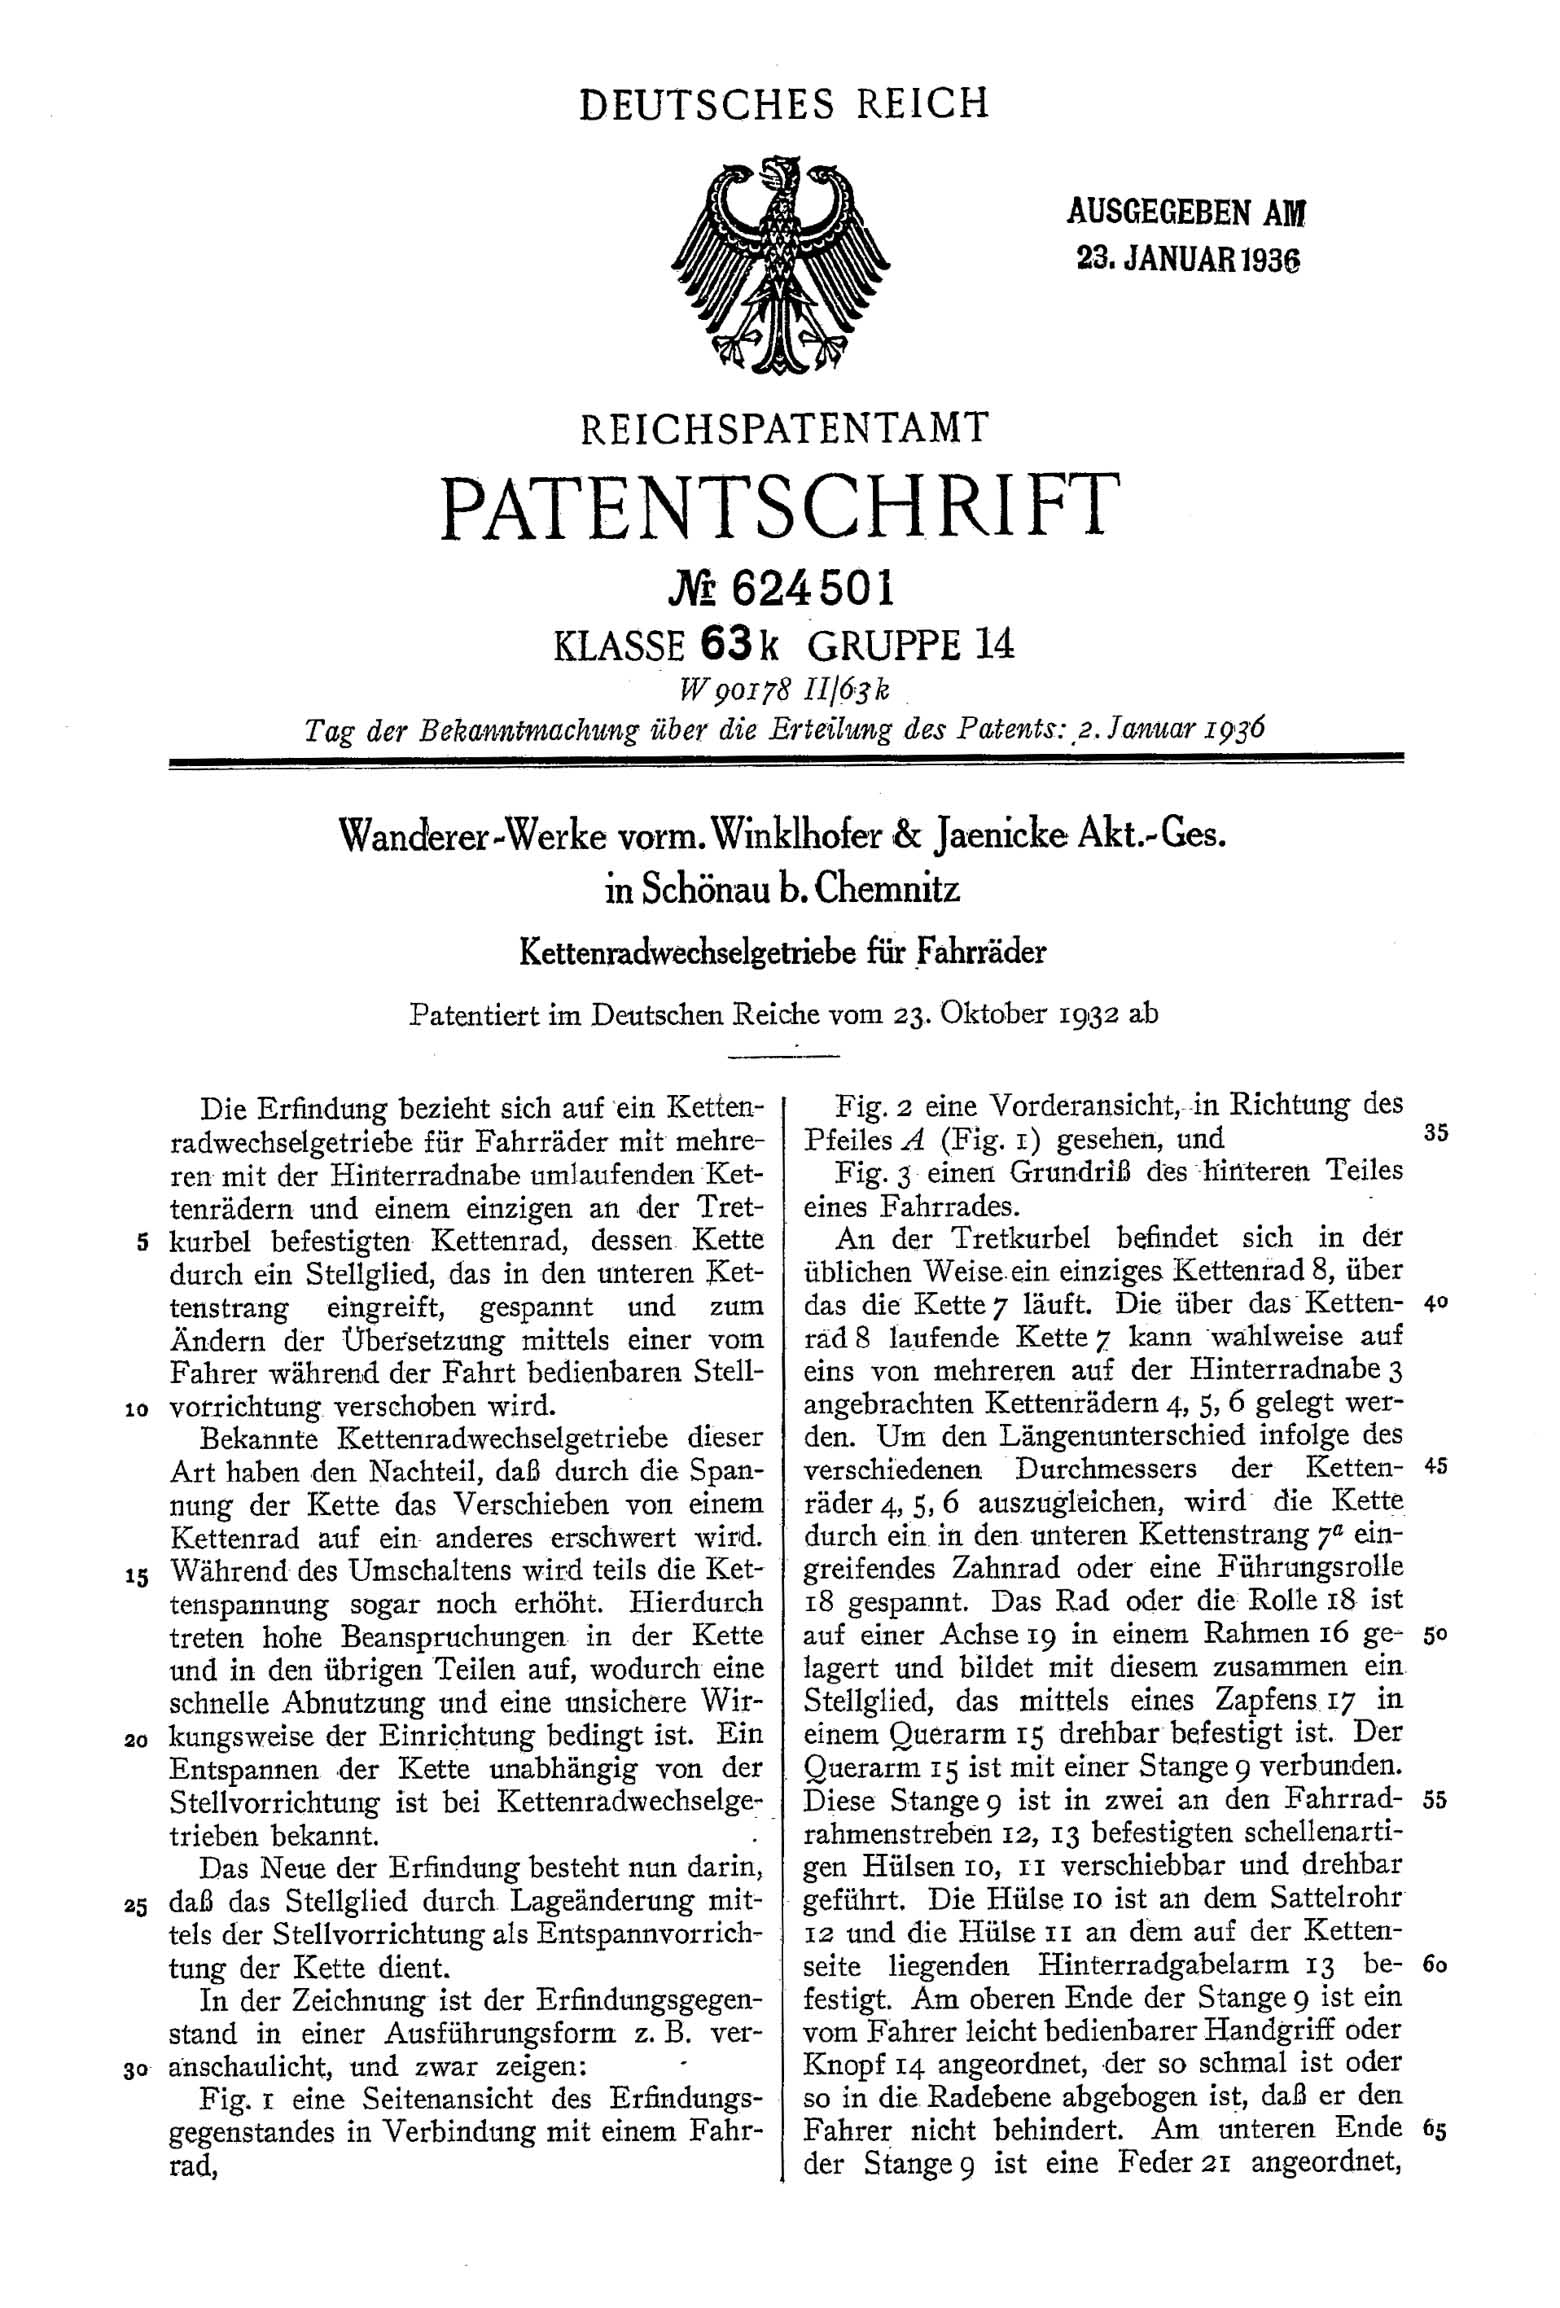 German Patent 624,501 - Wanderer scan 01 main image